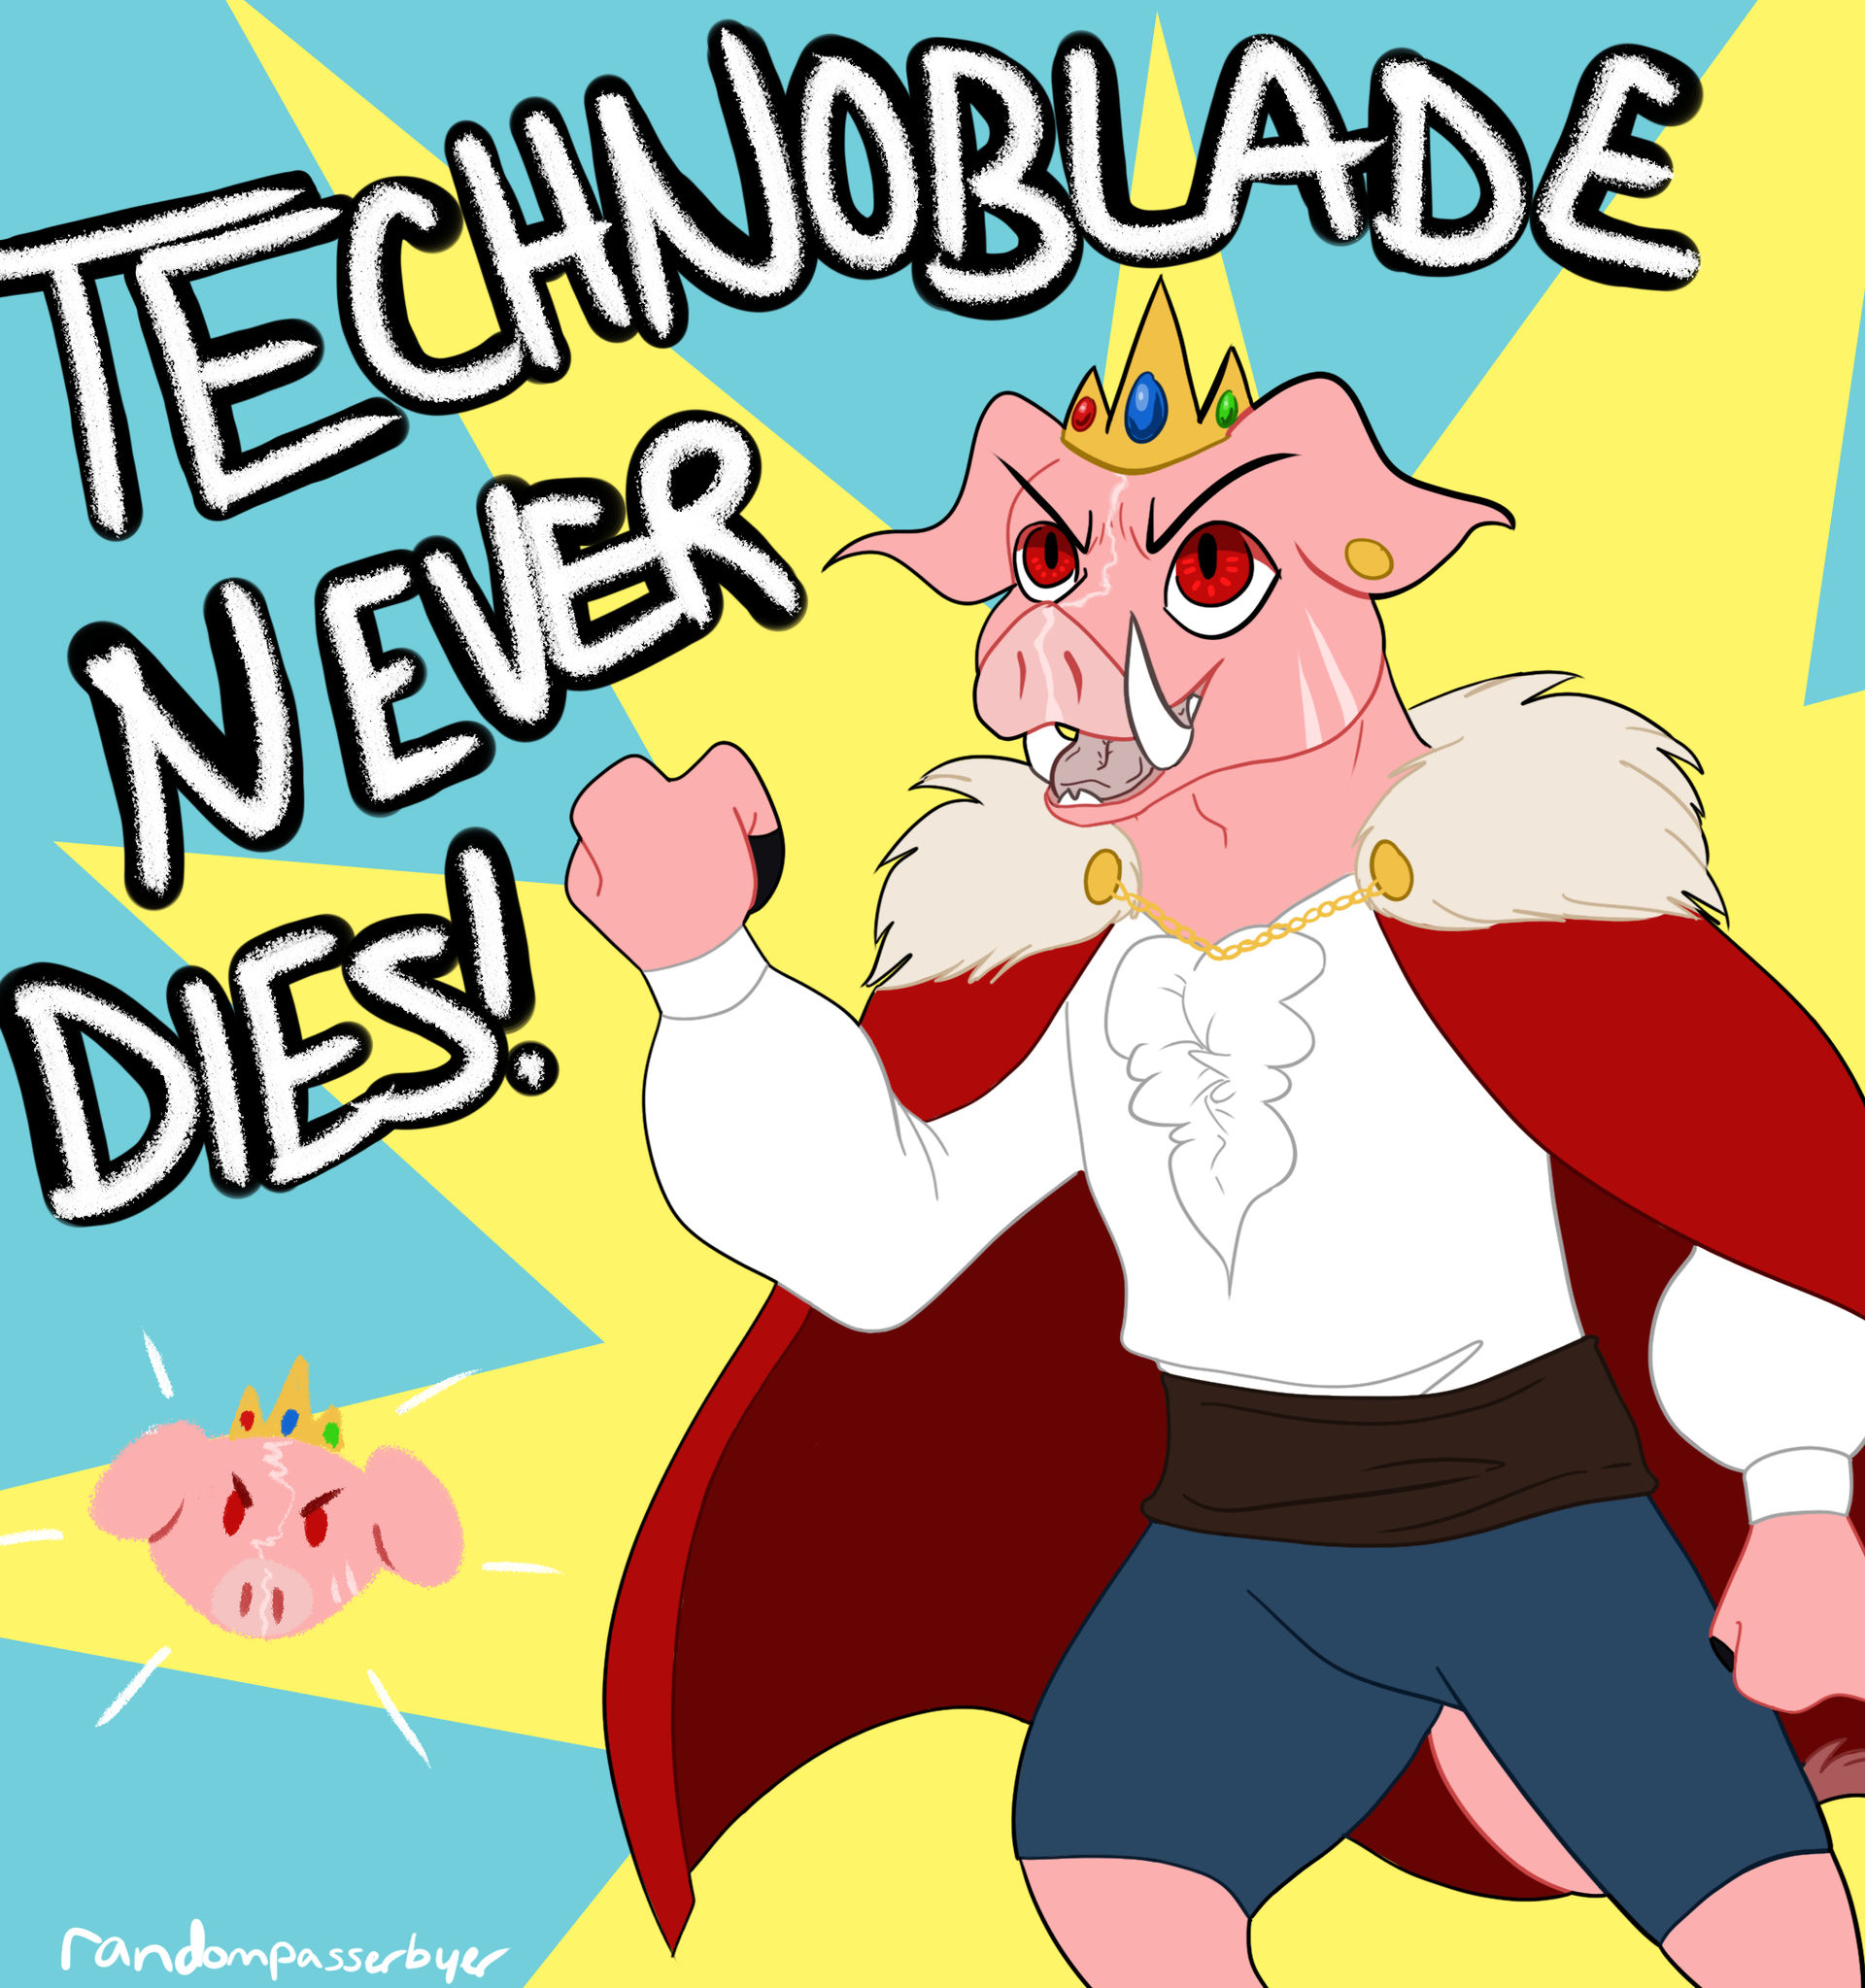 Technoblade Never Dies by GalaxyNeonLight on DeviantArt